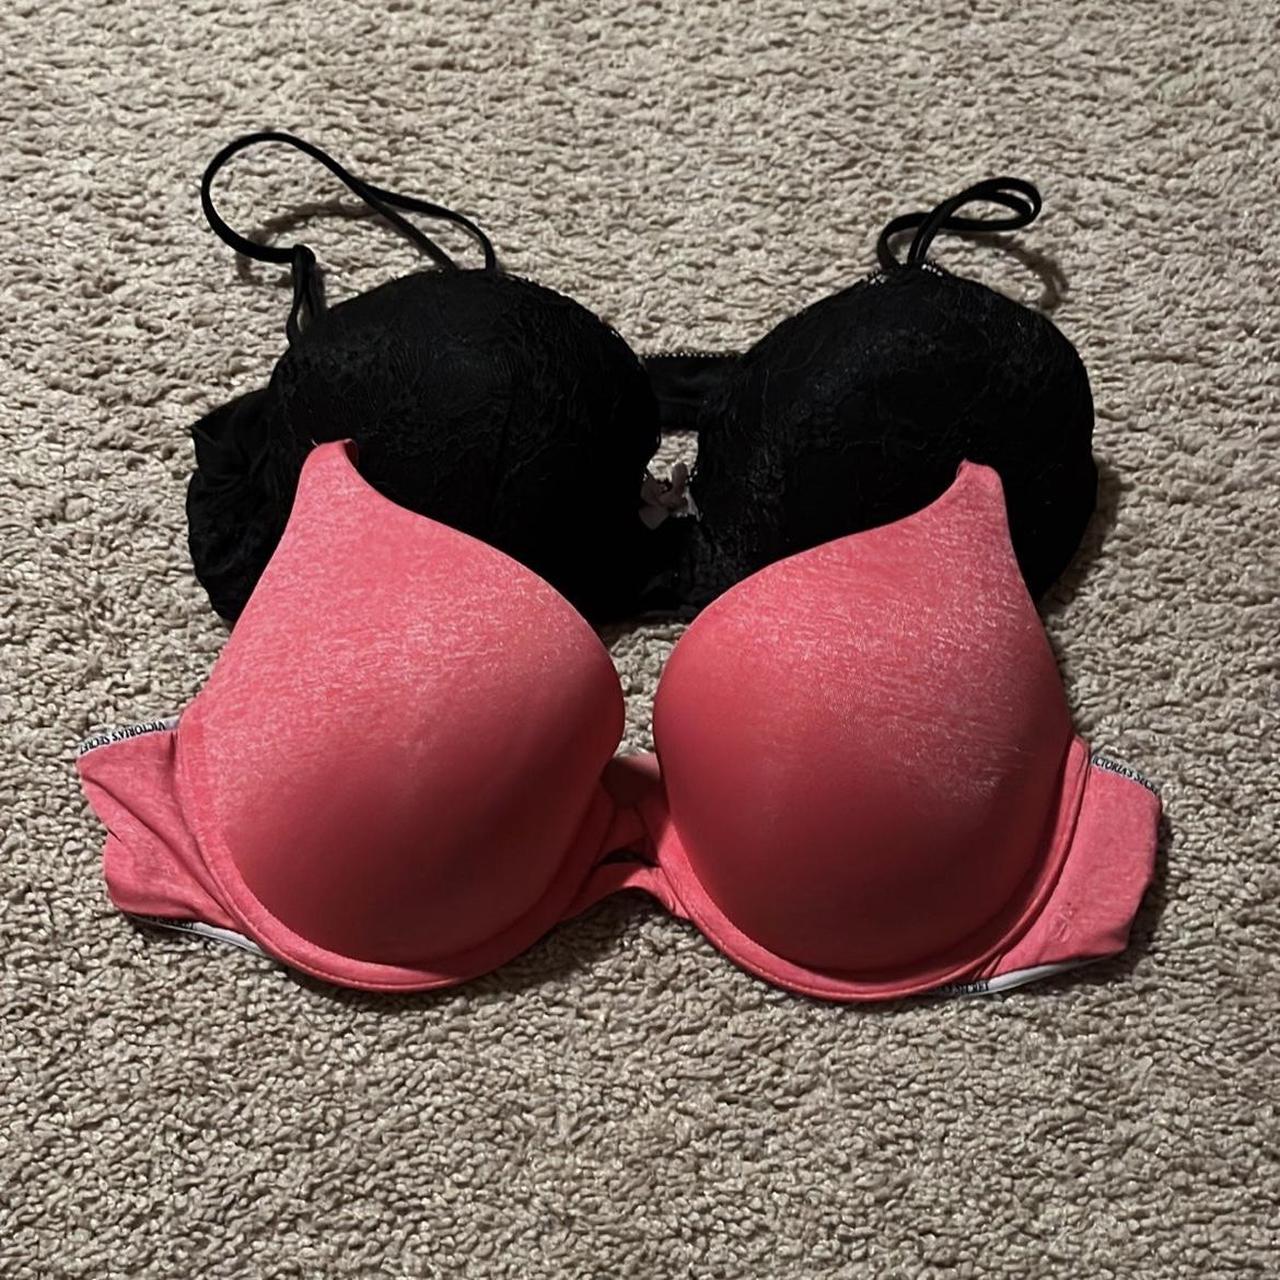 Victoria's Secret Padded Black and Pink Bra - Depop